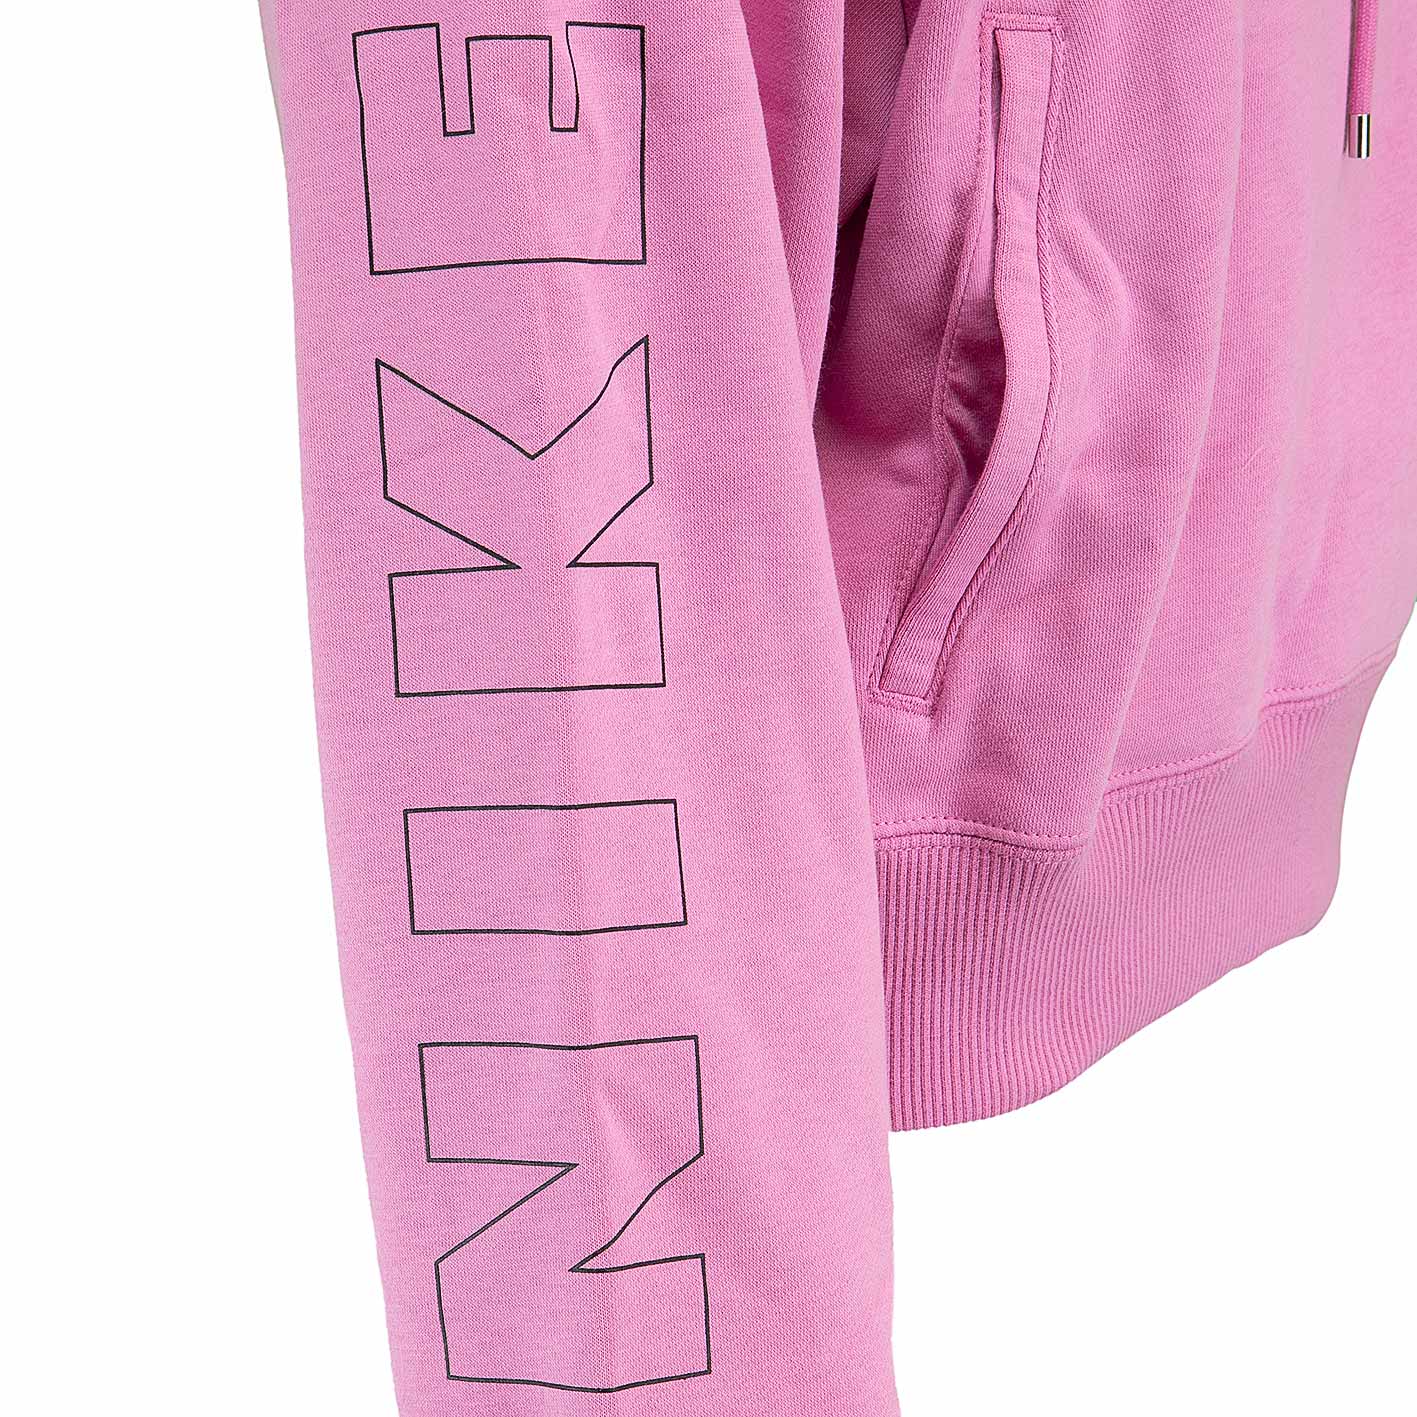 ☆ Nike Damen Hoody Air rosa - hier bestellen!